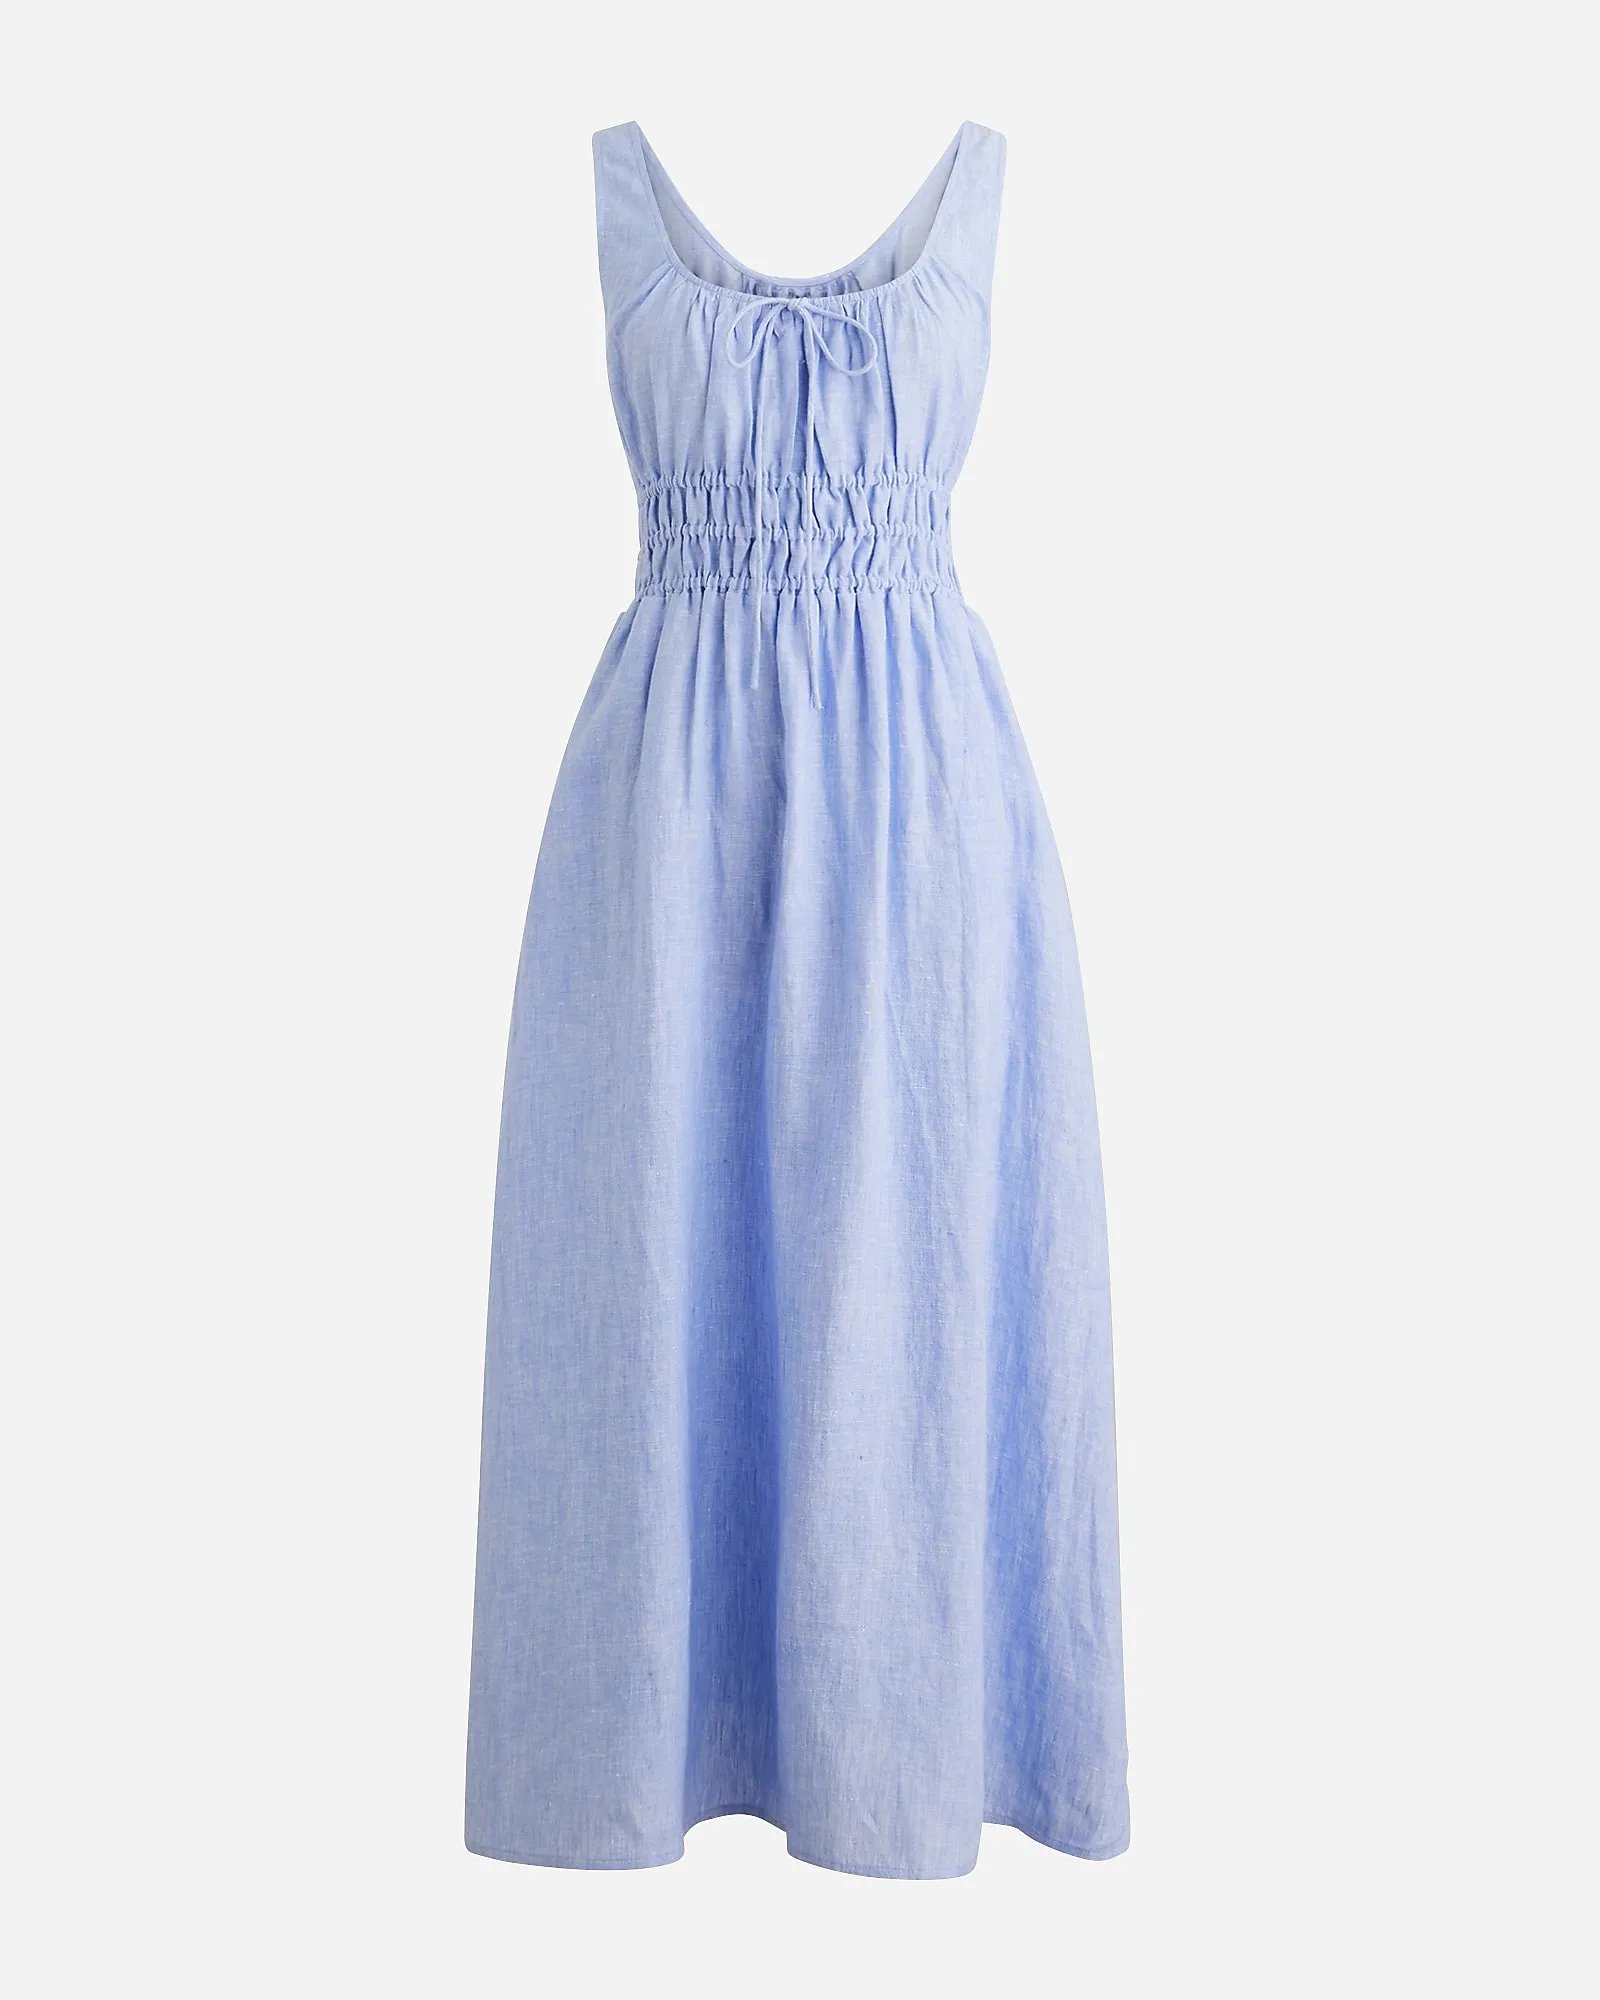 Smocked Linen Dress (Buy 2 Free Shipping)